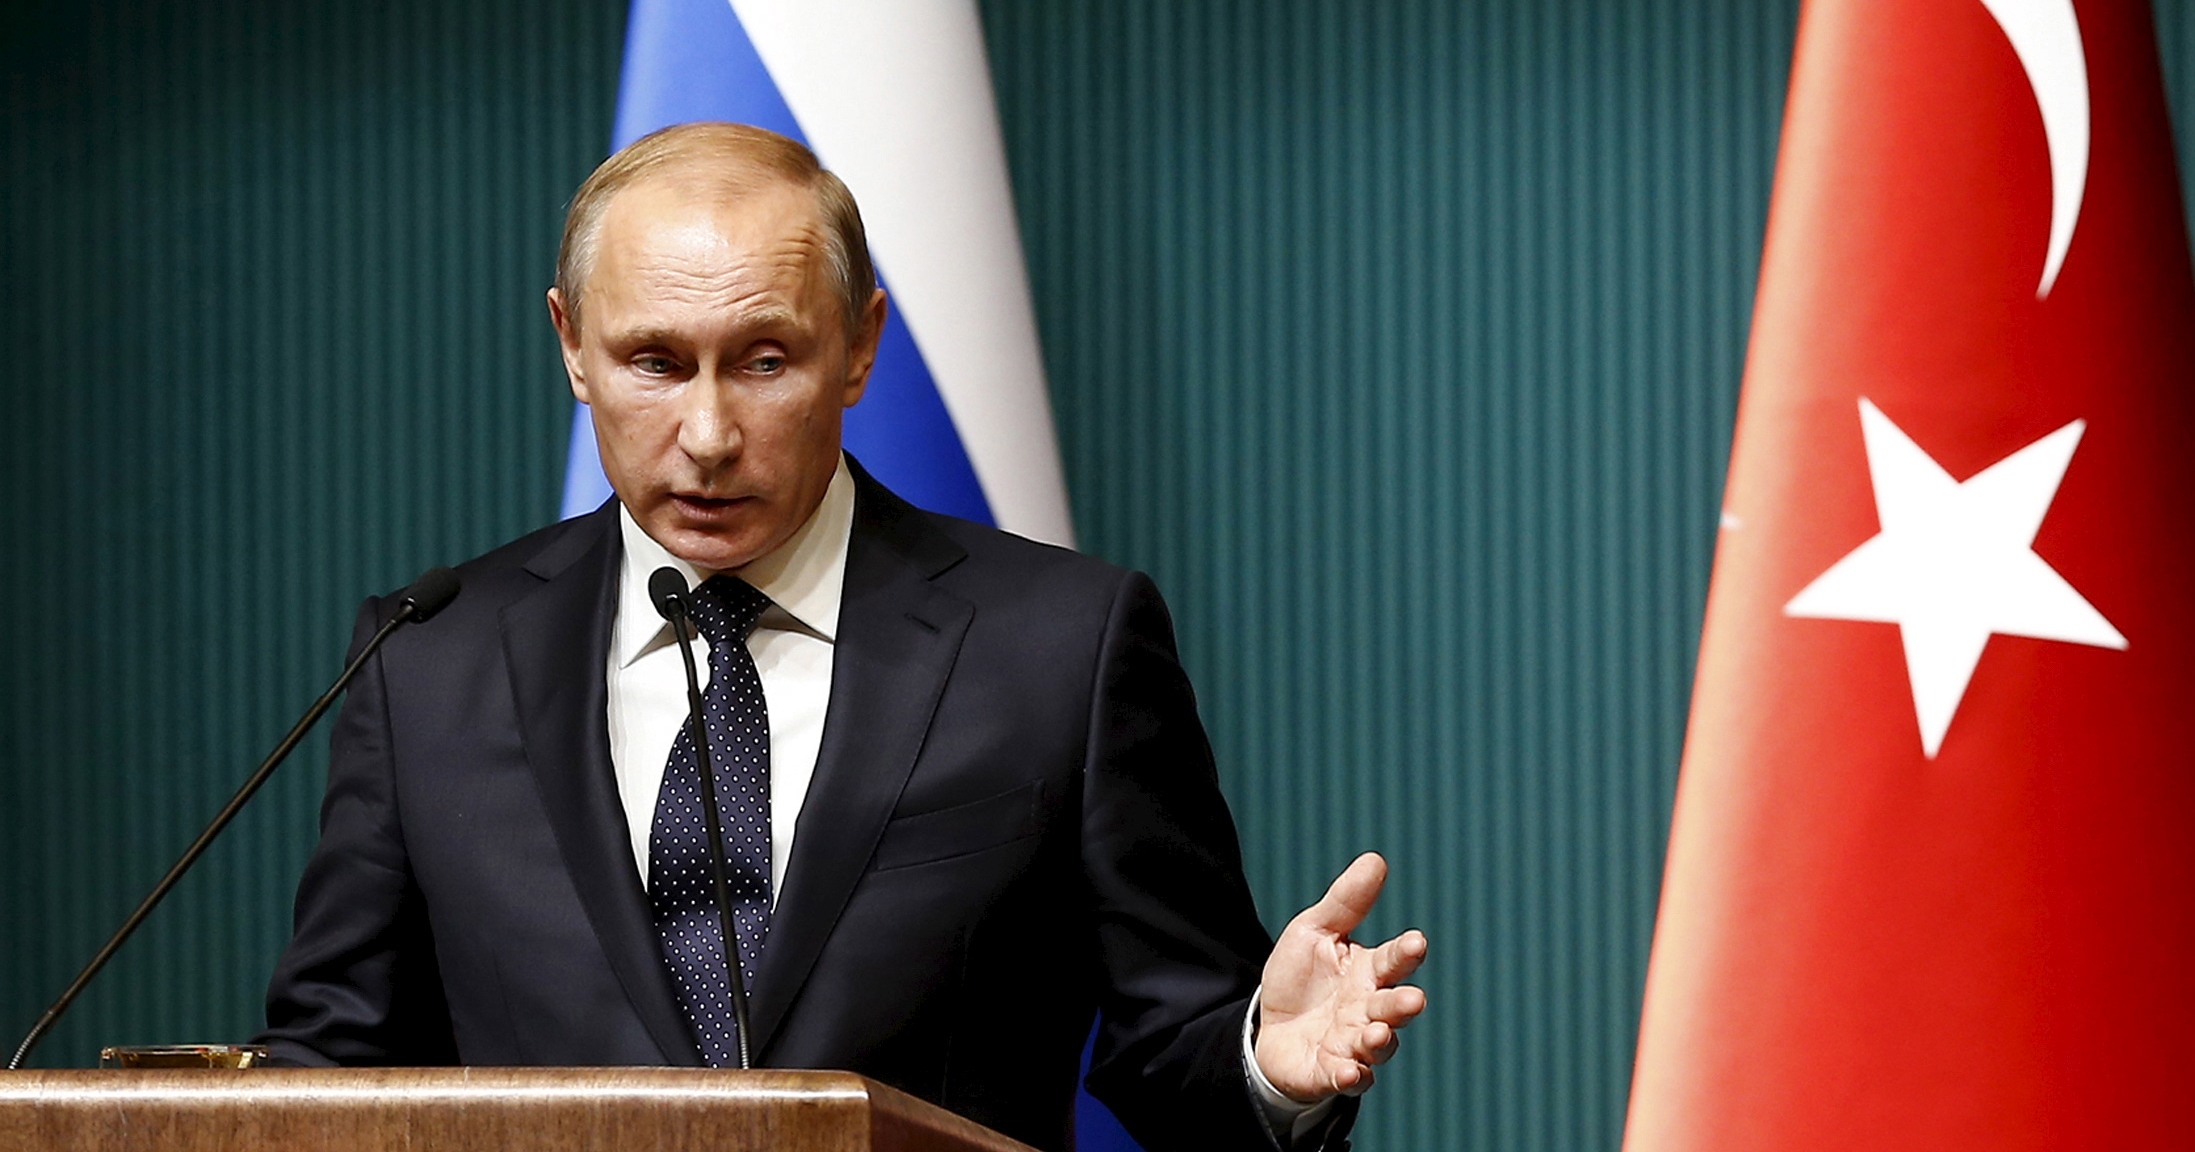 Its Russia Vs NATO As Vladimir Putin Imposes New Economic Sanctions